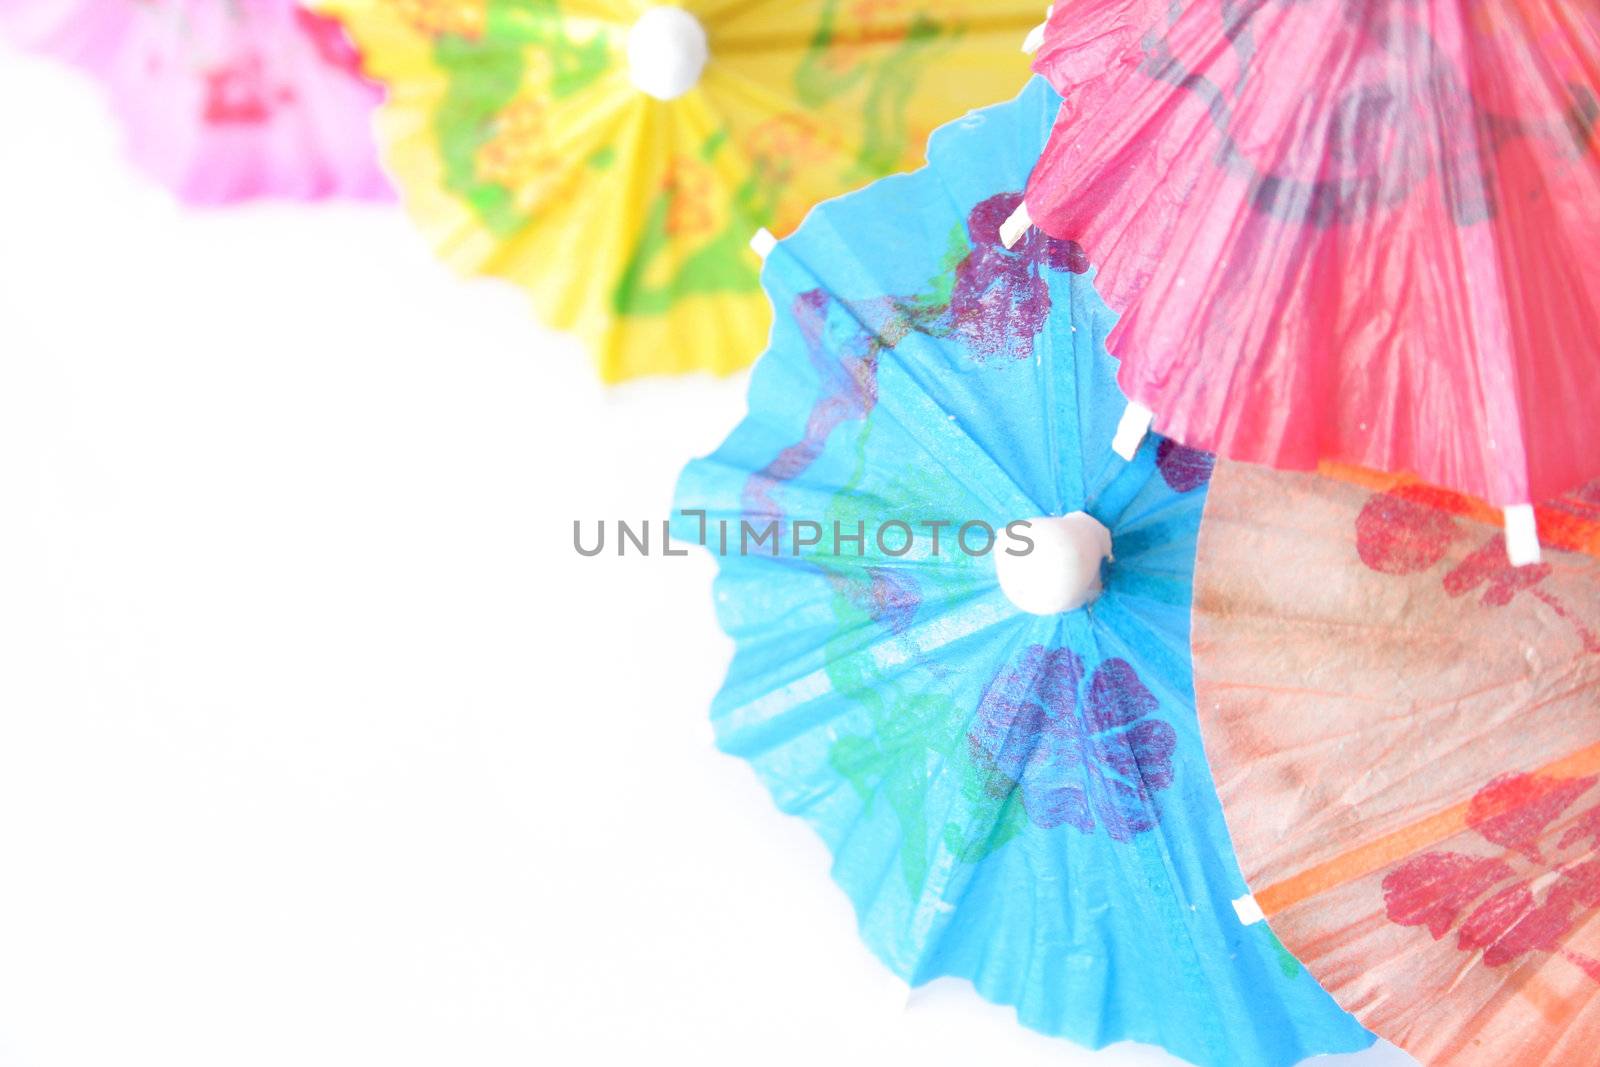 Cocktail Umbrellas by thephotoguy